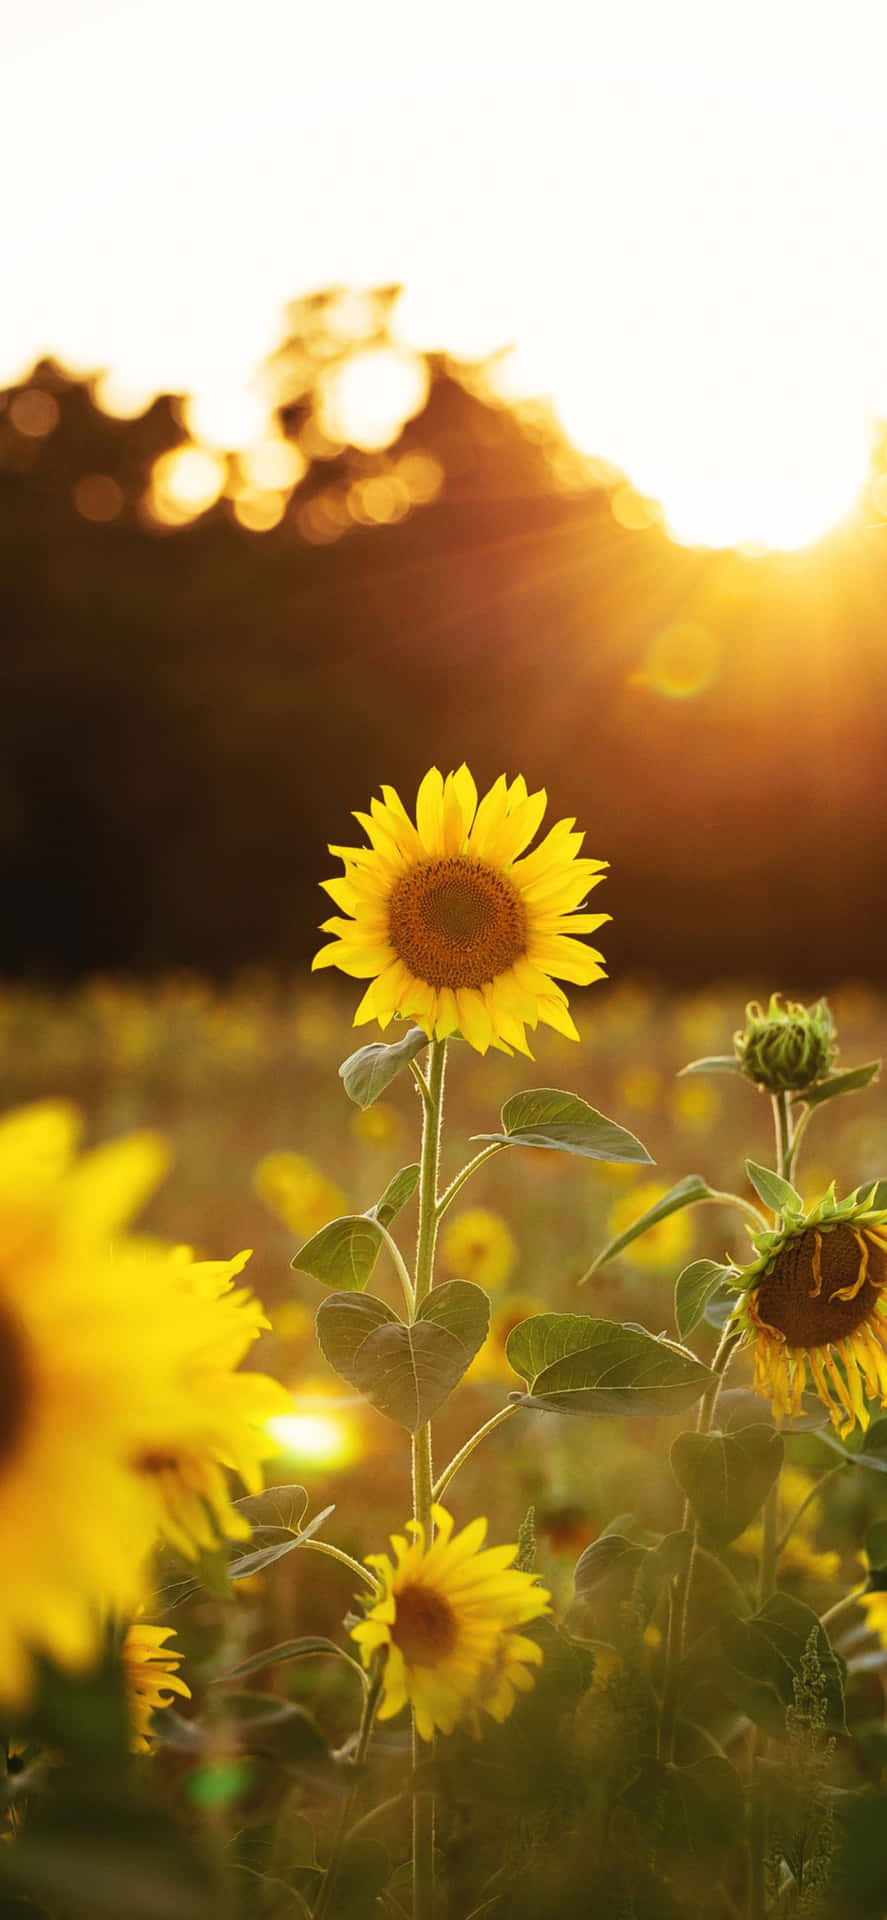 Sunny Display of Joyful Sunflower Blooms